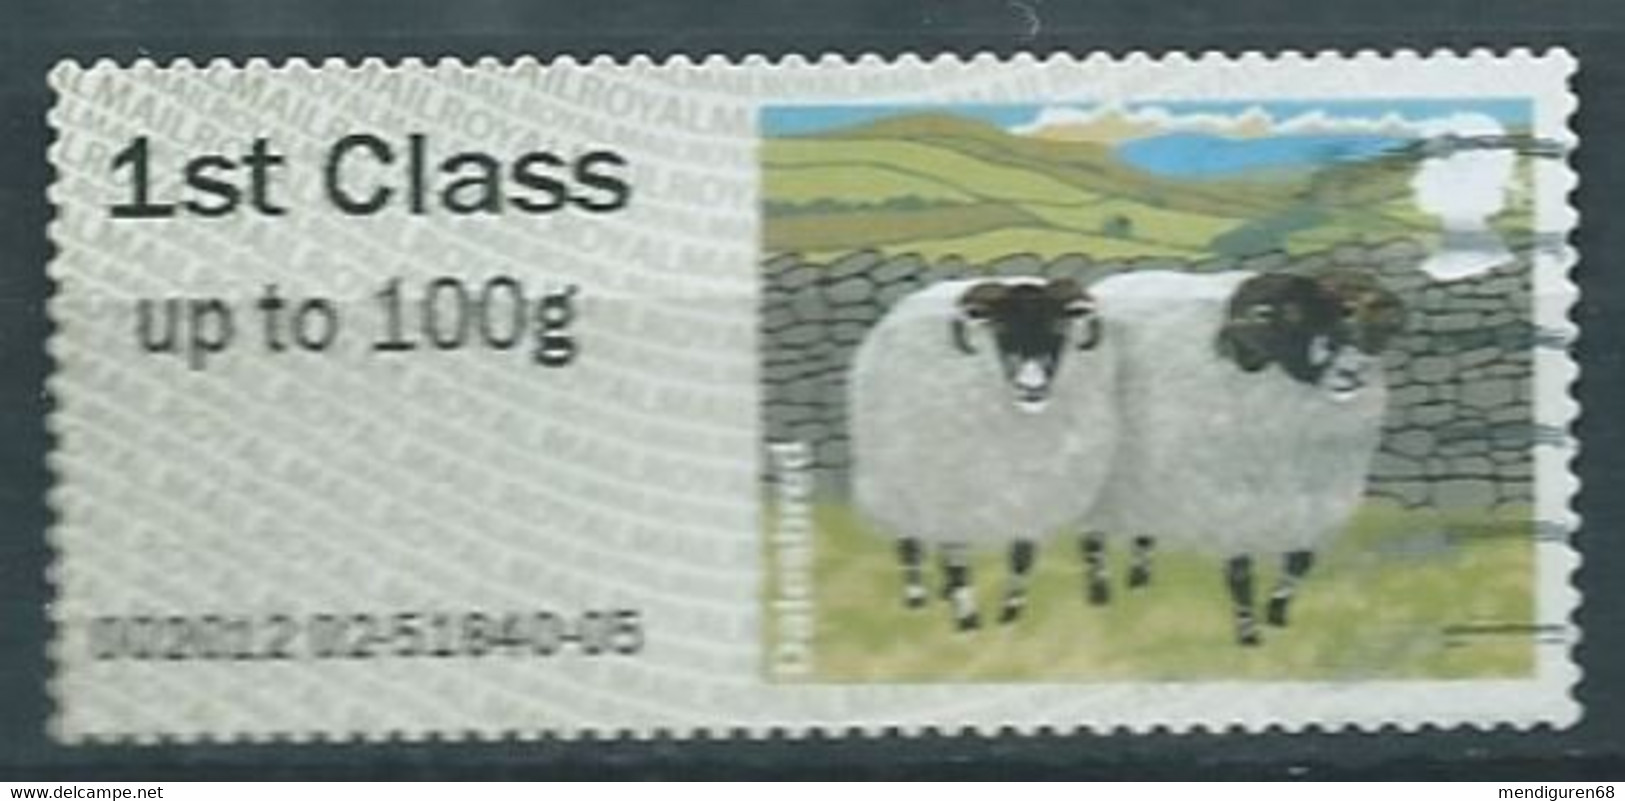 GROSBRITANNIEN GRANDE BRETAGNE GB 2012 POST&GO SHEEP:DALESBRED 1ST CLASS Up To 10g USED PAPER SG TD 30 MI ATM 2 YT TD28 - Post & Go (distributori)